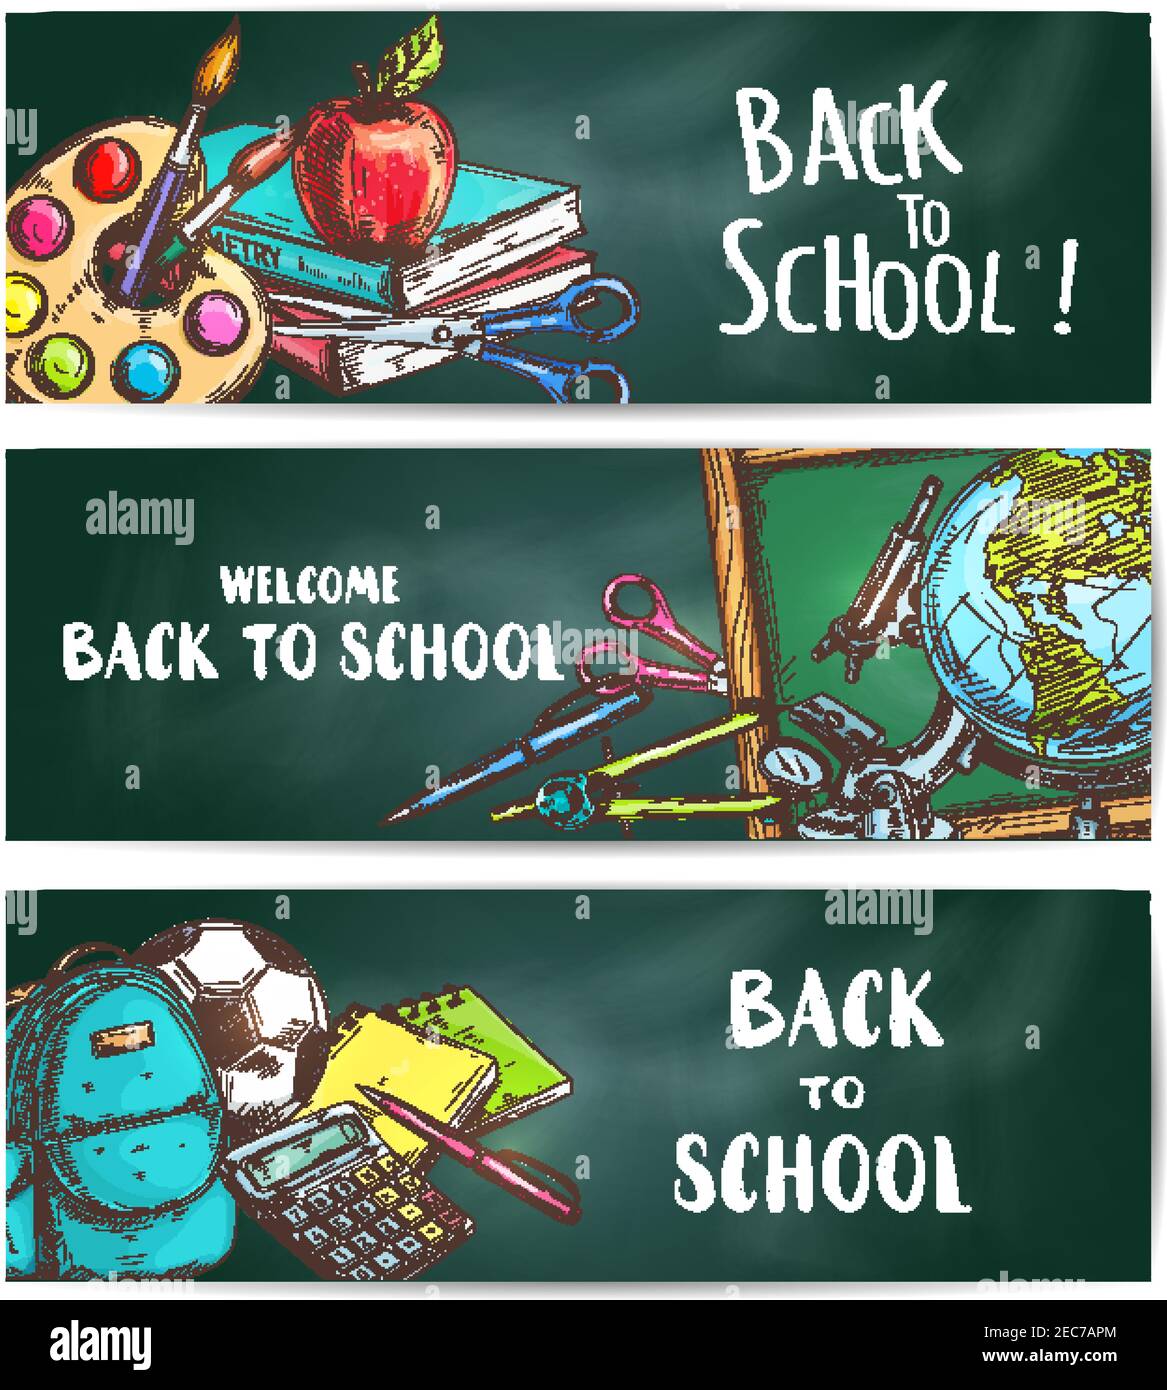 Back to School welcome banners on green blackboard background. Apple, backpack, rucksack, soccer ball, pen, calculator, pencil, copybook, scissors, gl Stock Vector